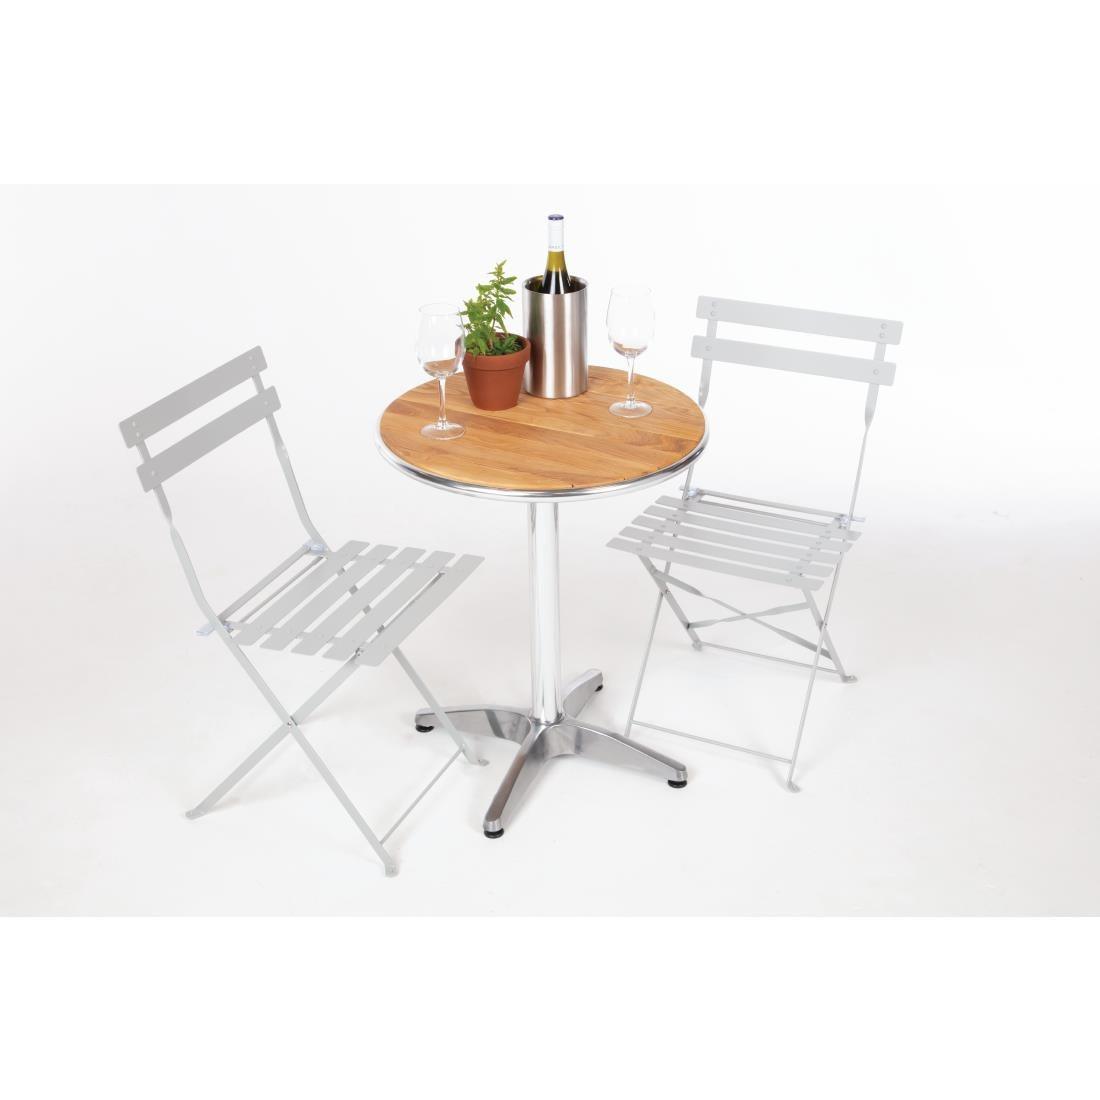 Bolero GH551 Bolero Grey Pavement Style Steel Folding Chairs (Pack 2) - HospoStore